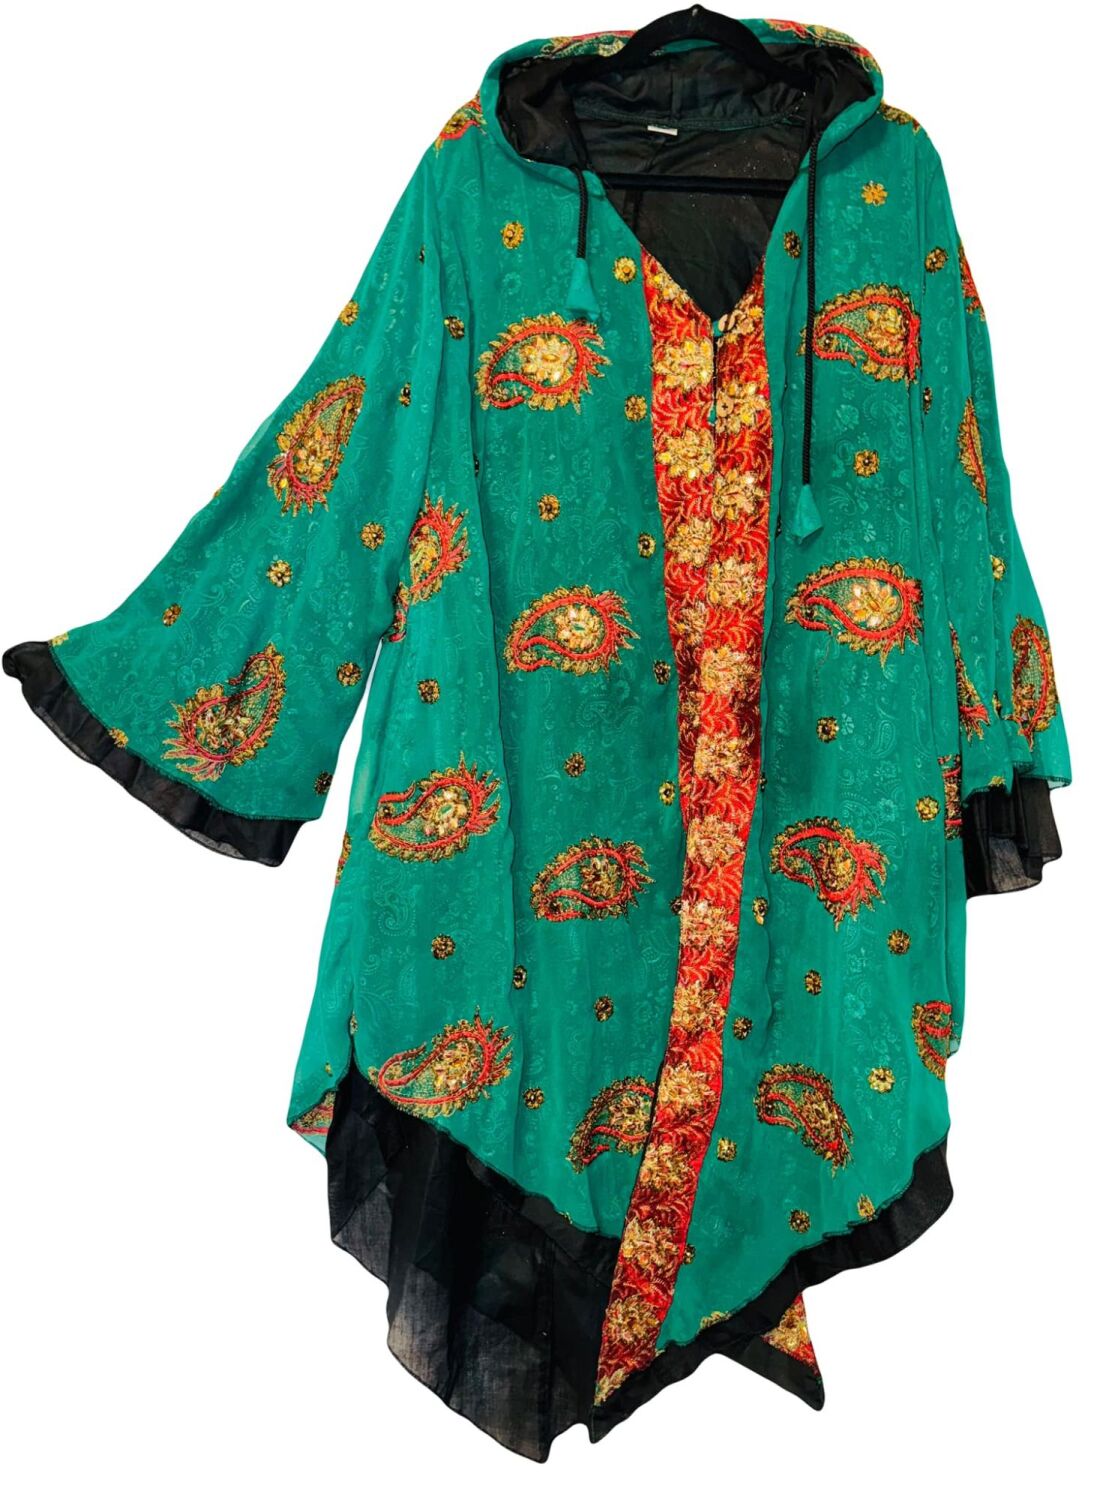 Fae decorated sari pixie hood jacket